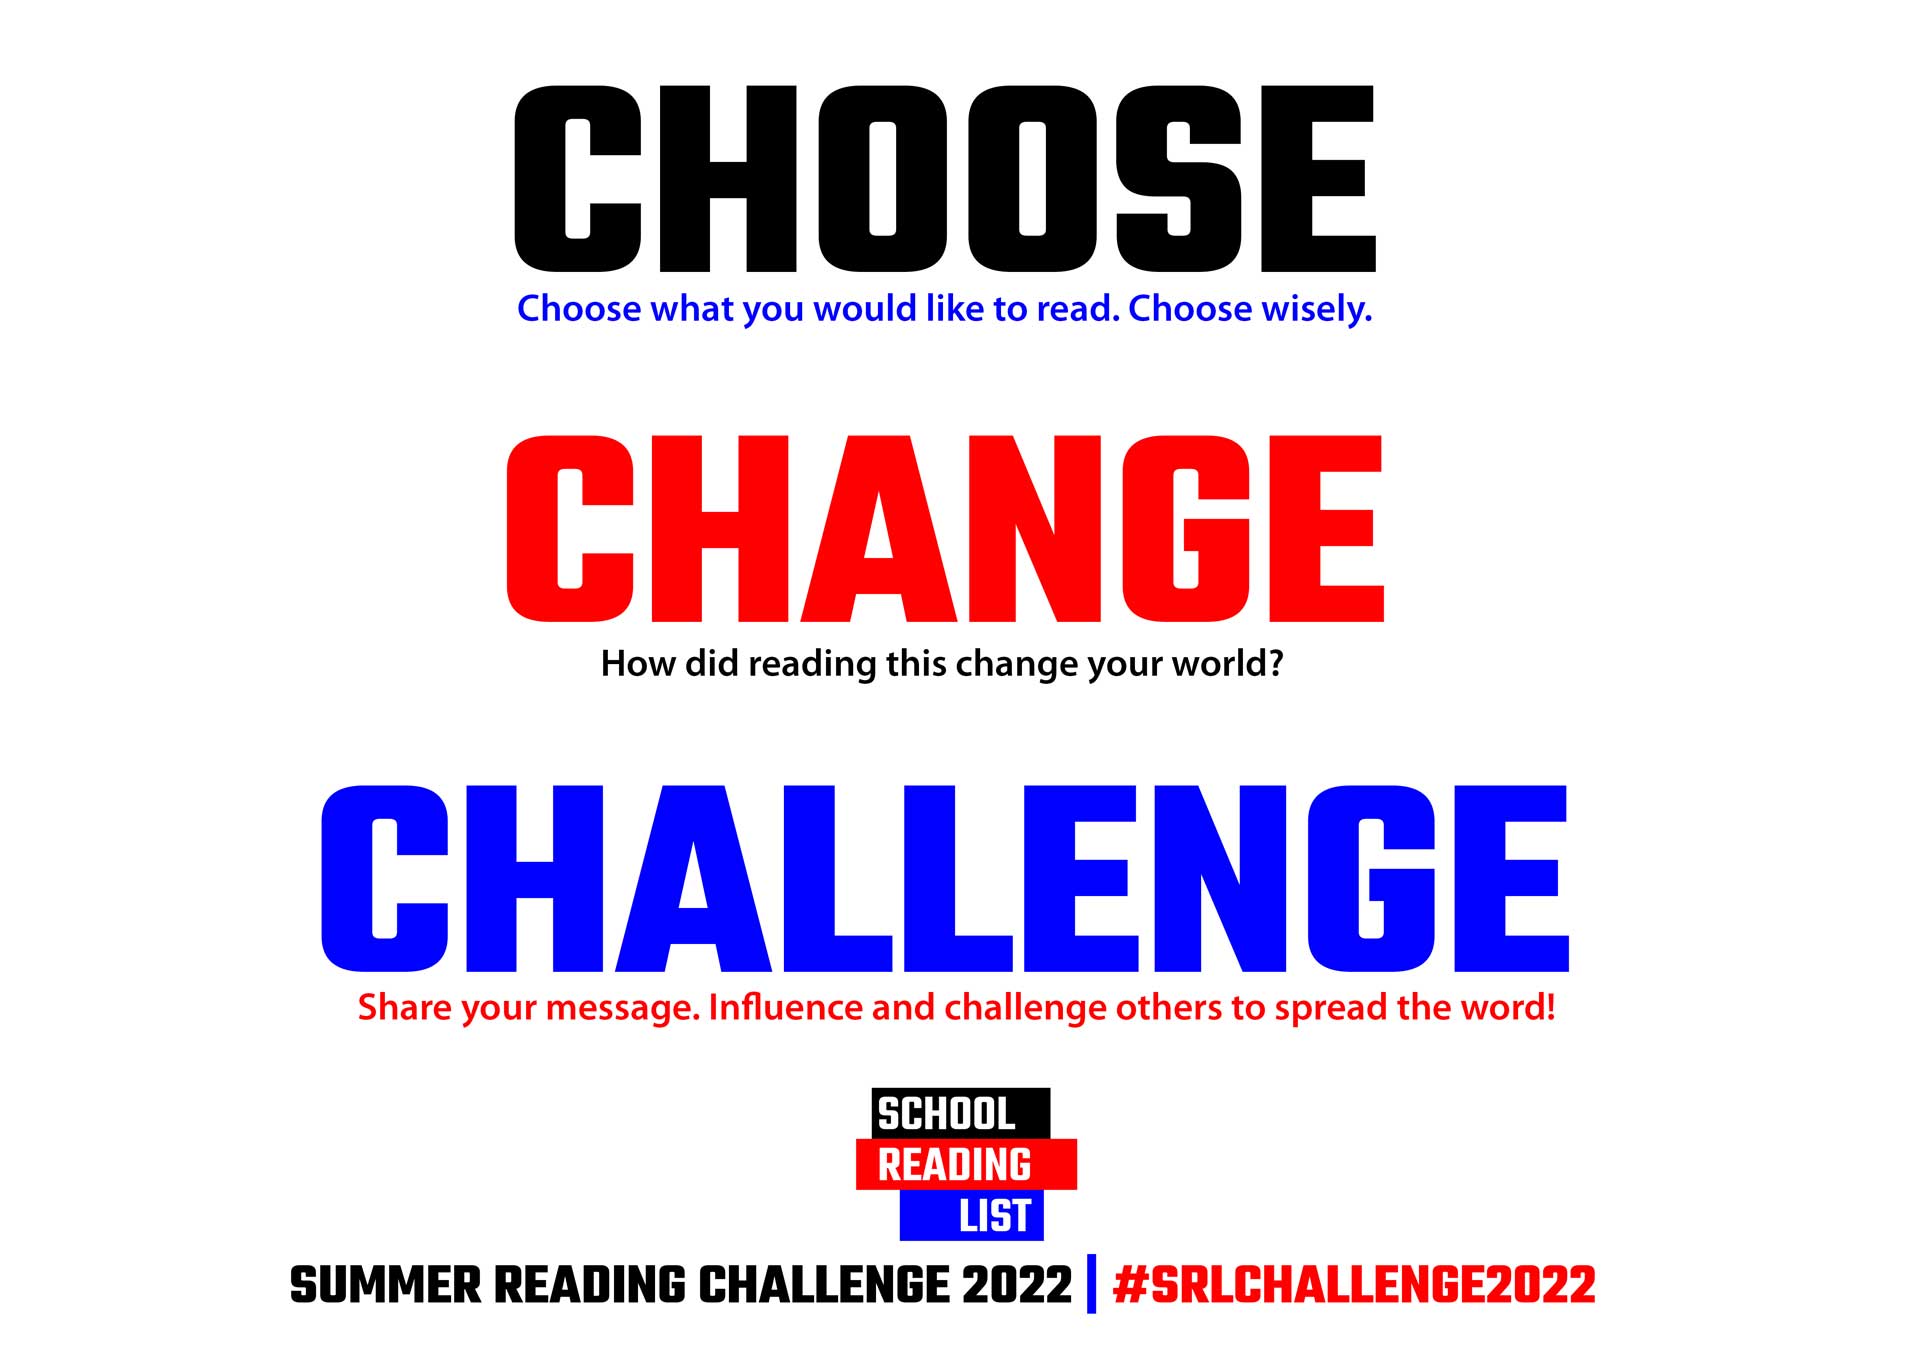 Summer Reading Challenge 2022